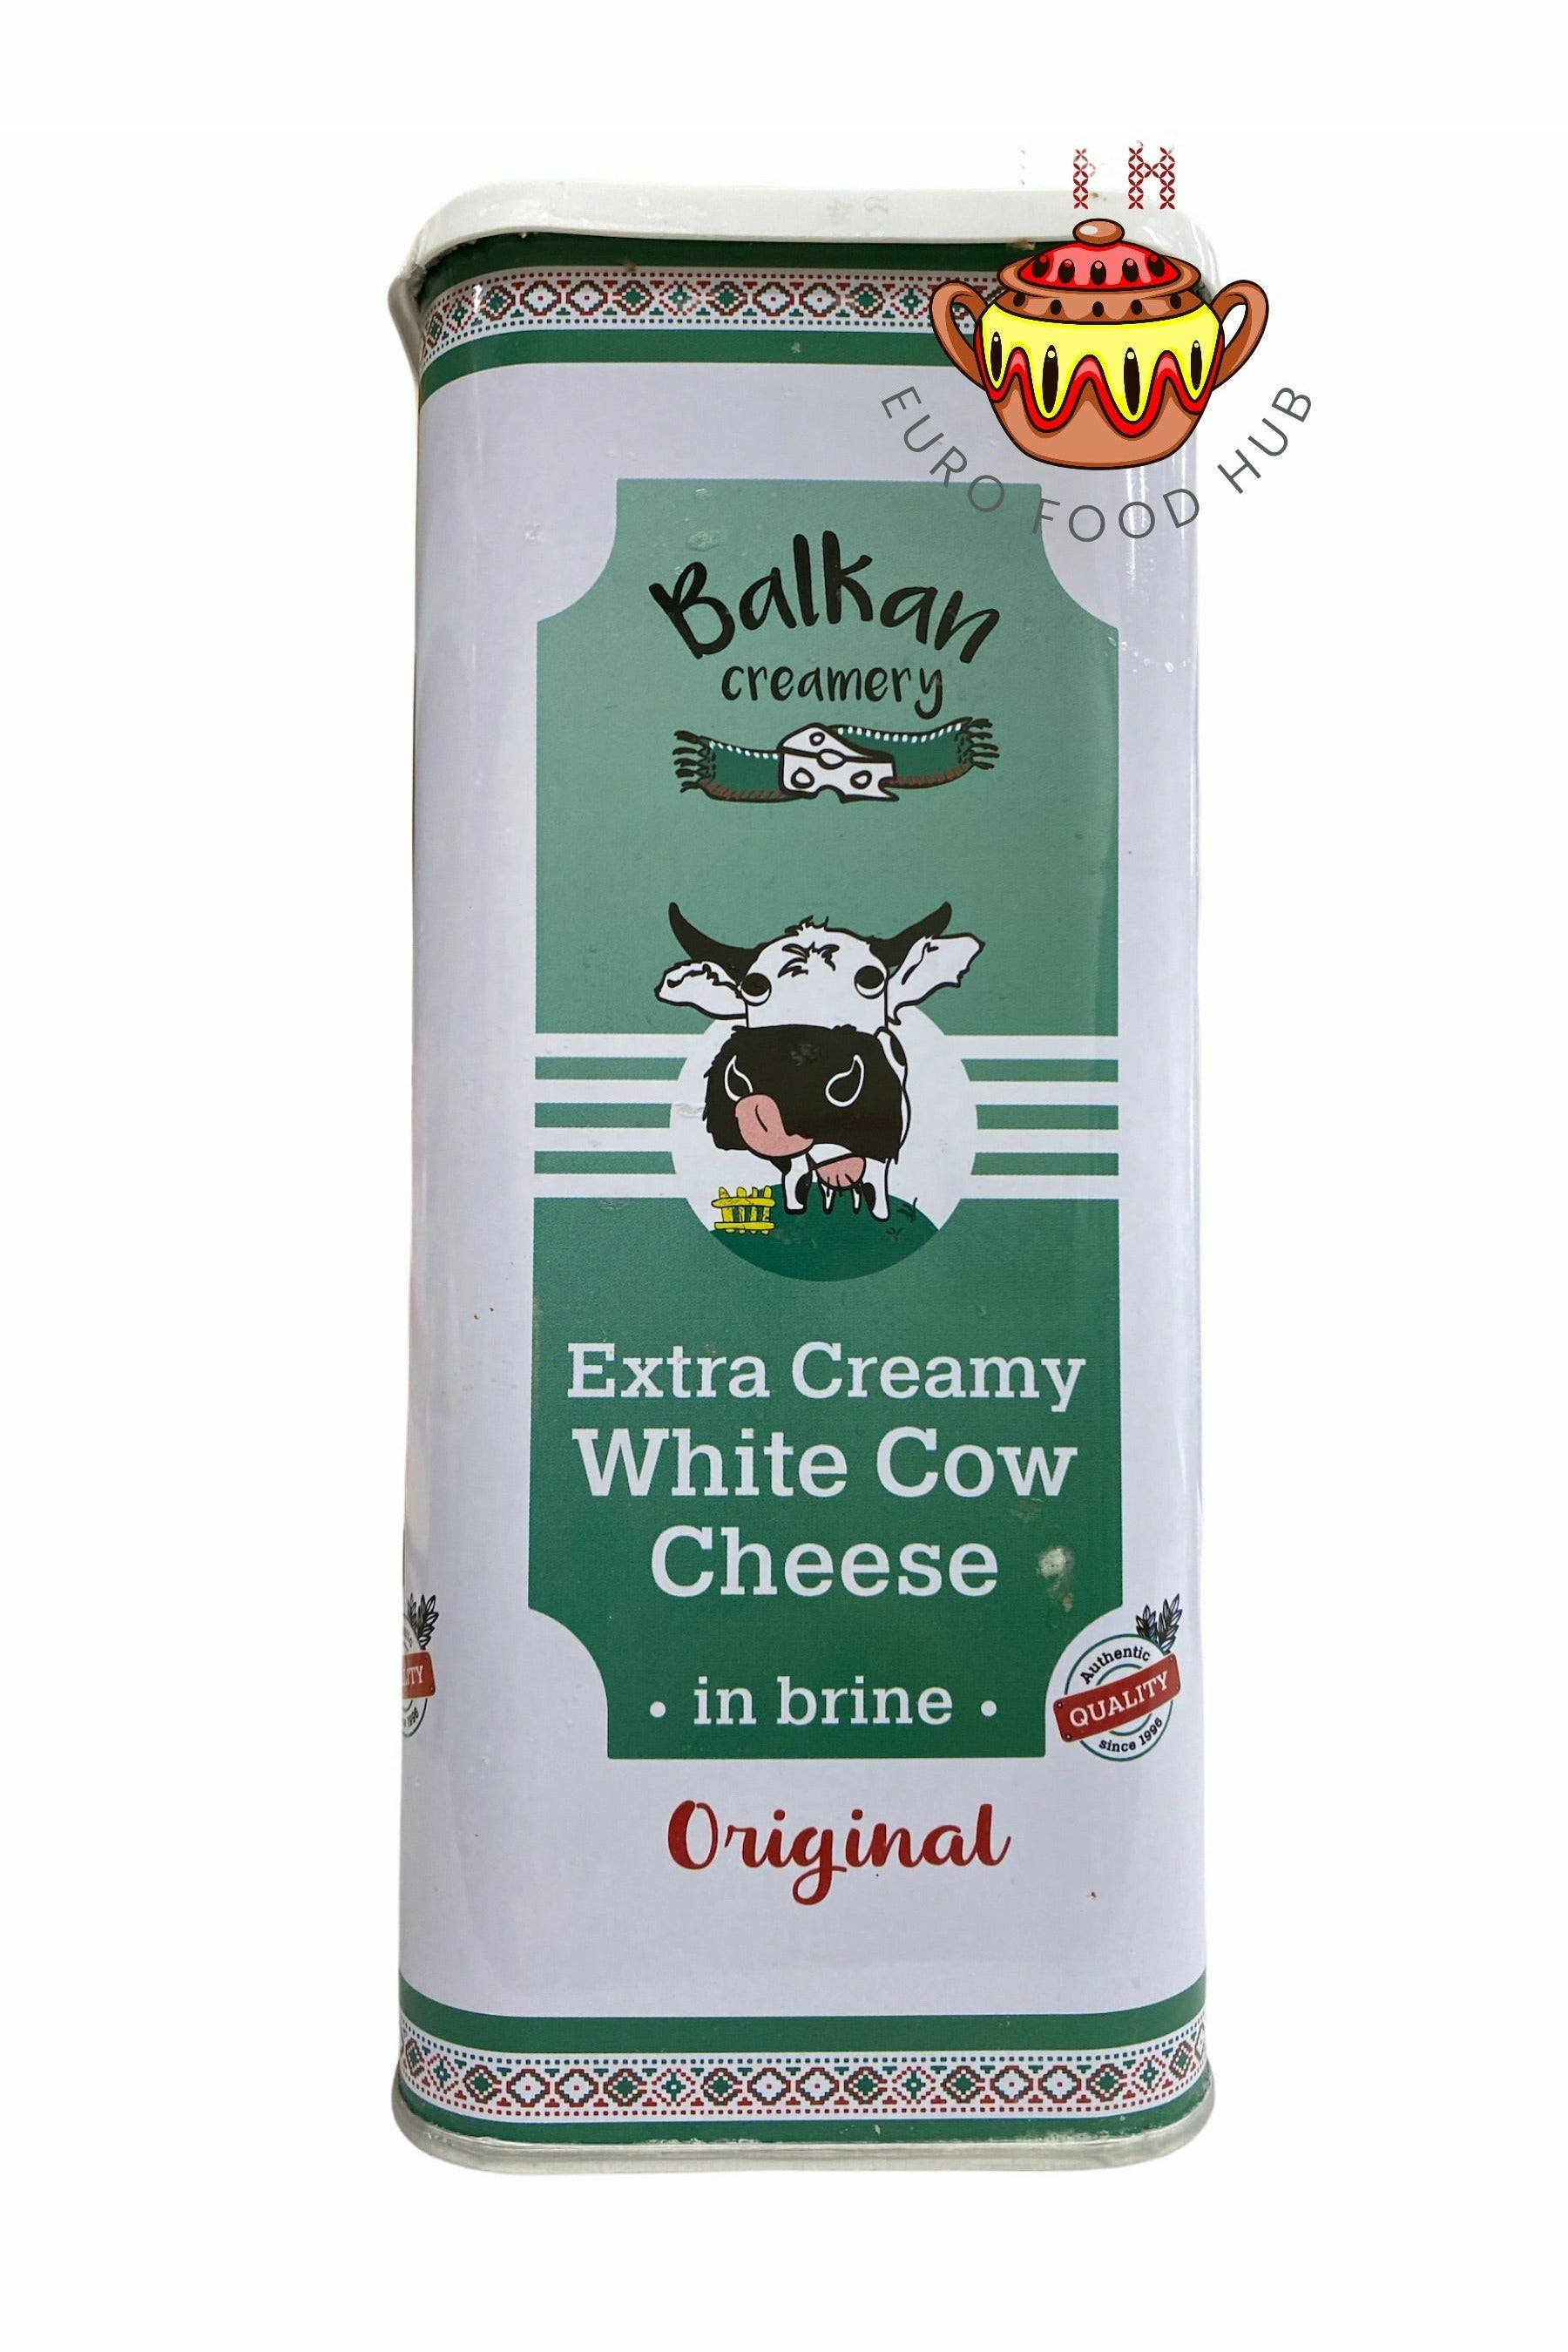 Balkan Creamery Extra Creamy White COW Cheese in Brine